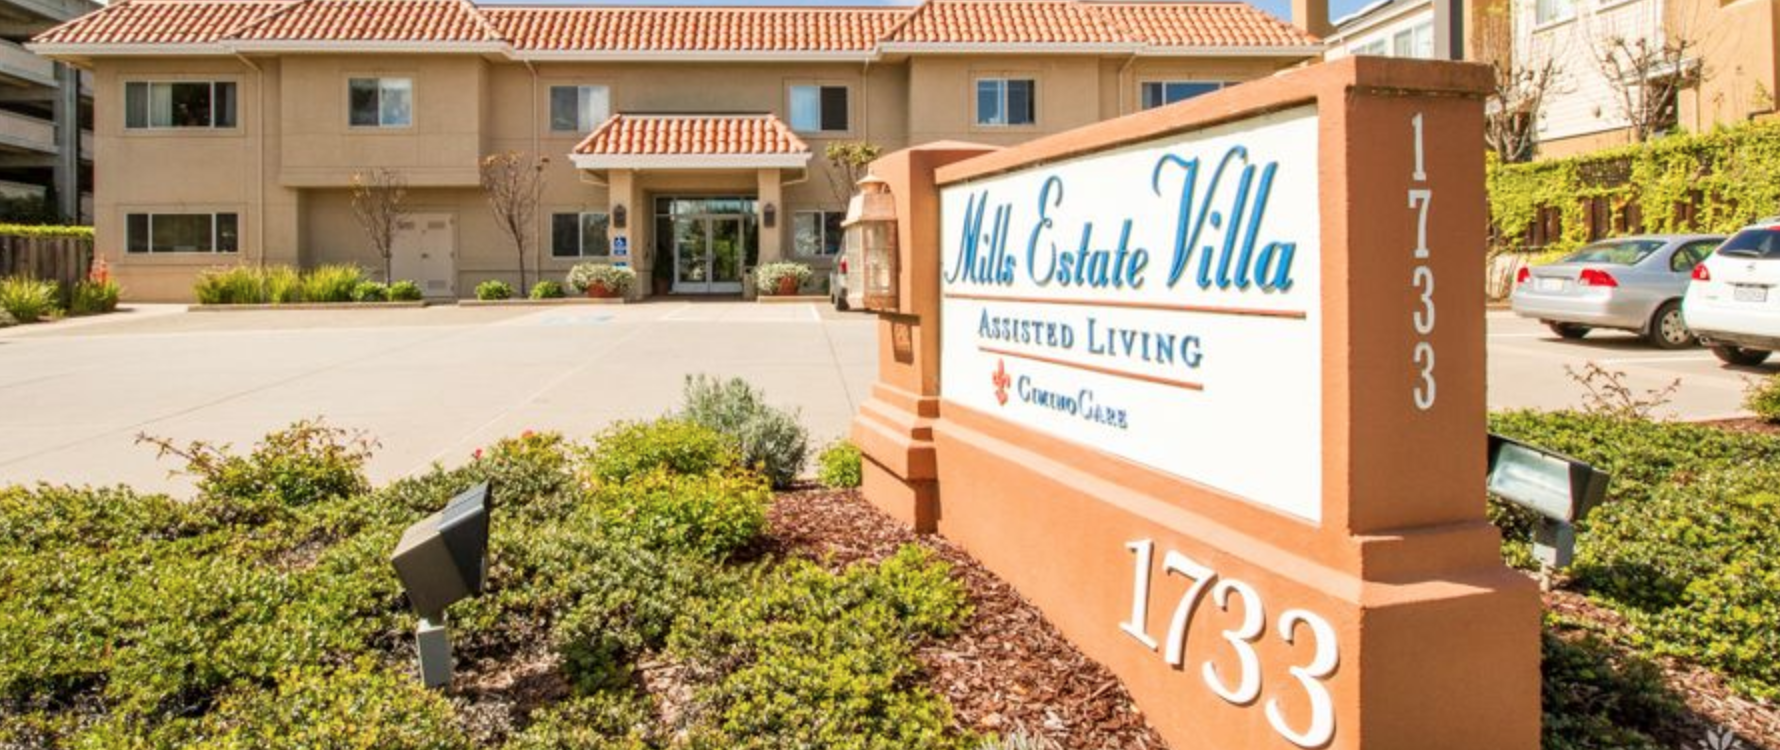 Mills Estate Villa image